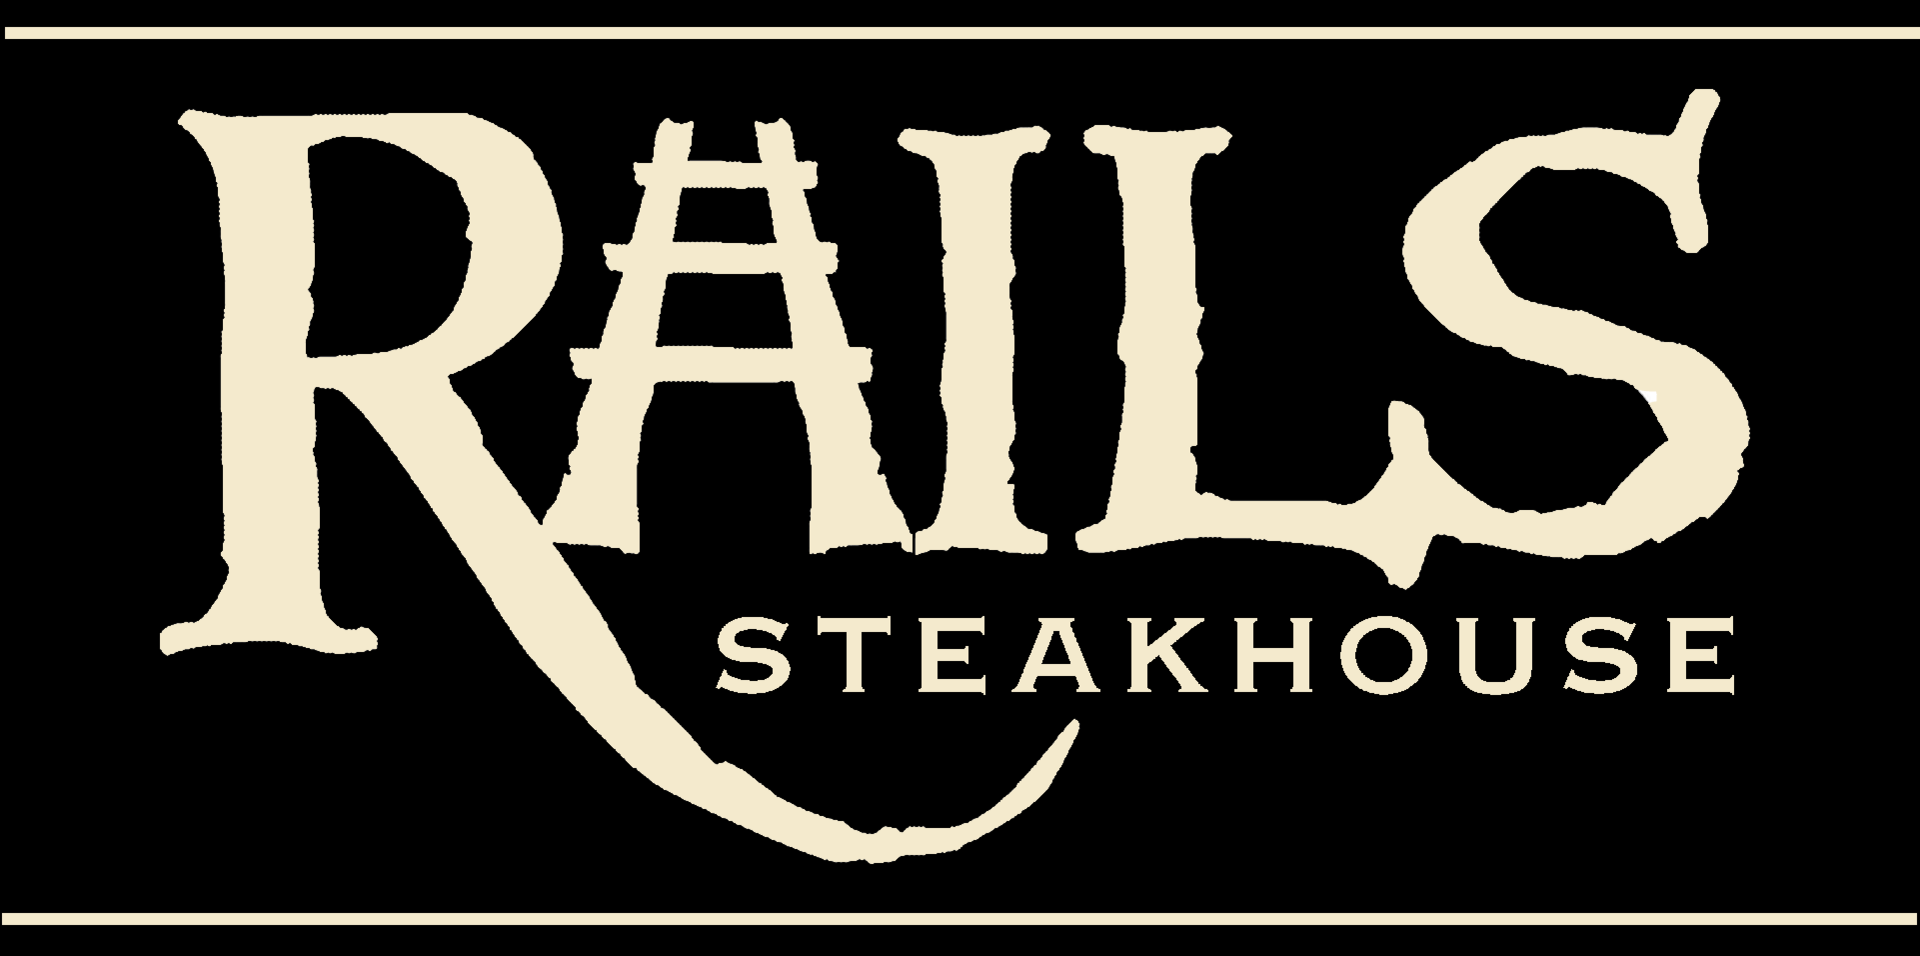 rails steakhouse music